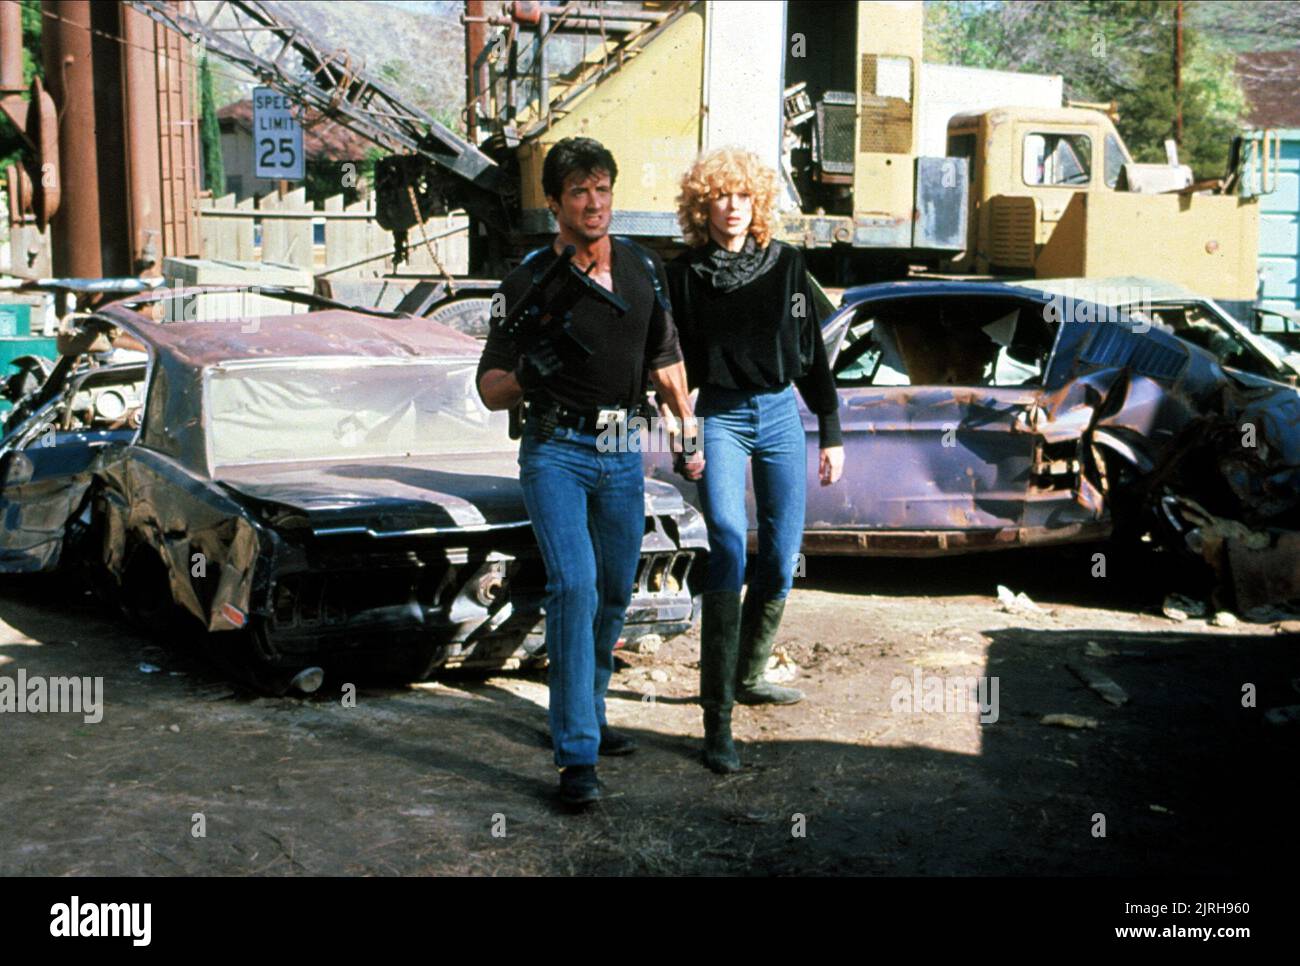 Die City-Cobra, (COBRA) USA 1986, Regie: George Pan Cosmatos, SYLVESTER  STALLONE, BRIGITTE NIELSEN, Stichwort: MP, Maschinenpistole Stock Photo -  Alamy